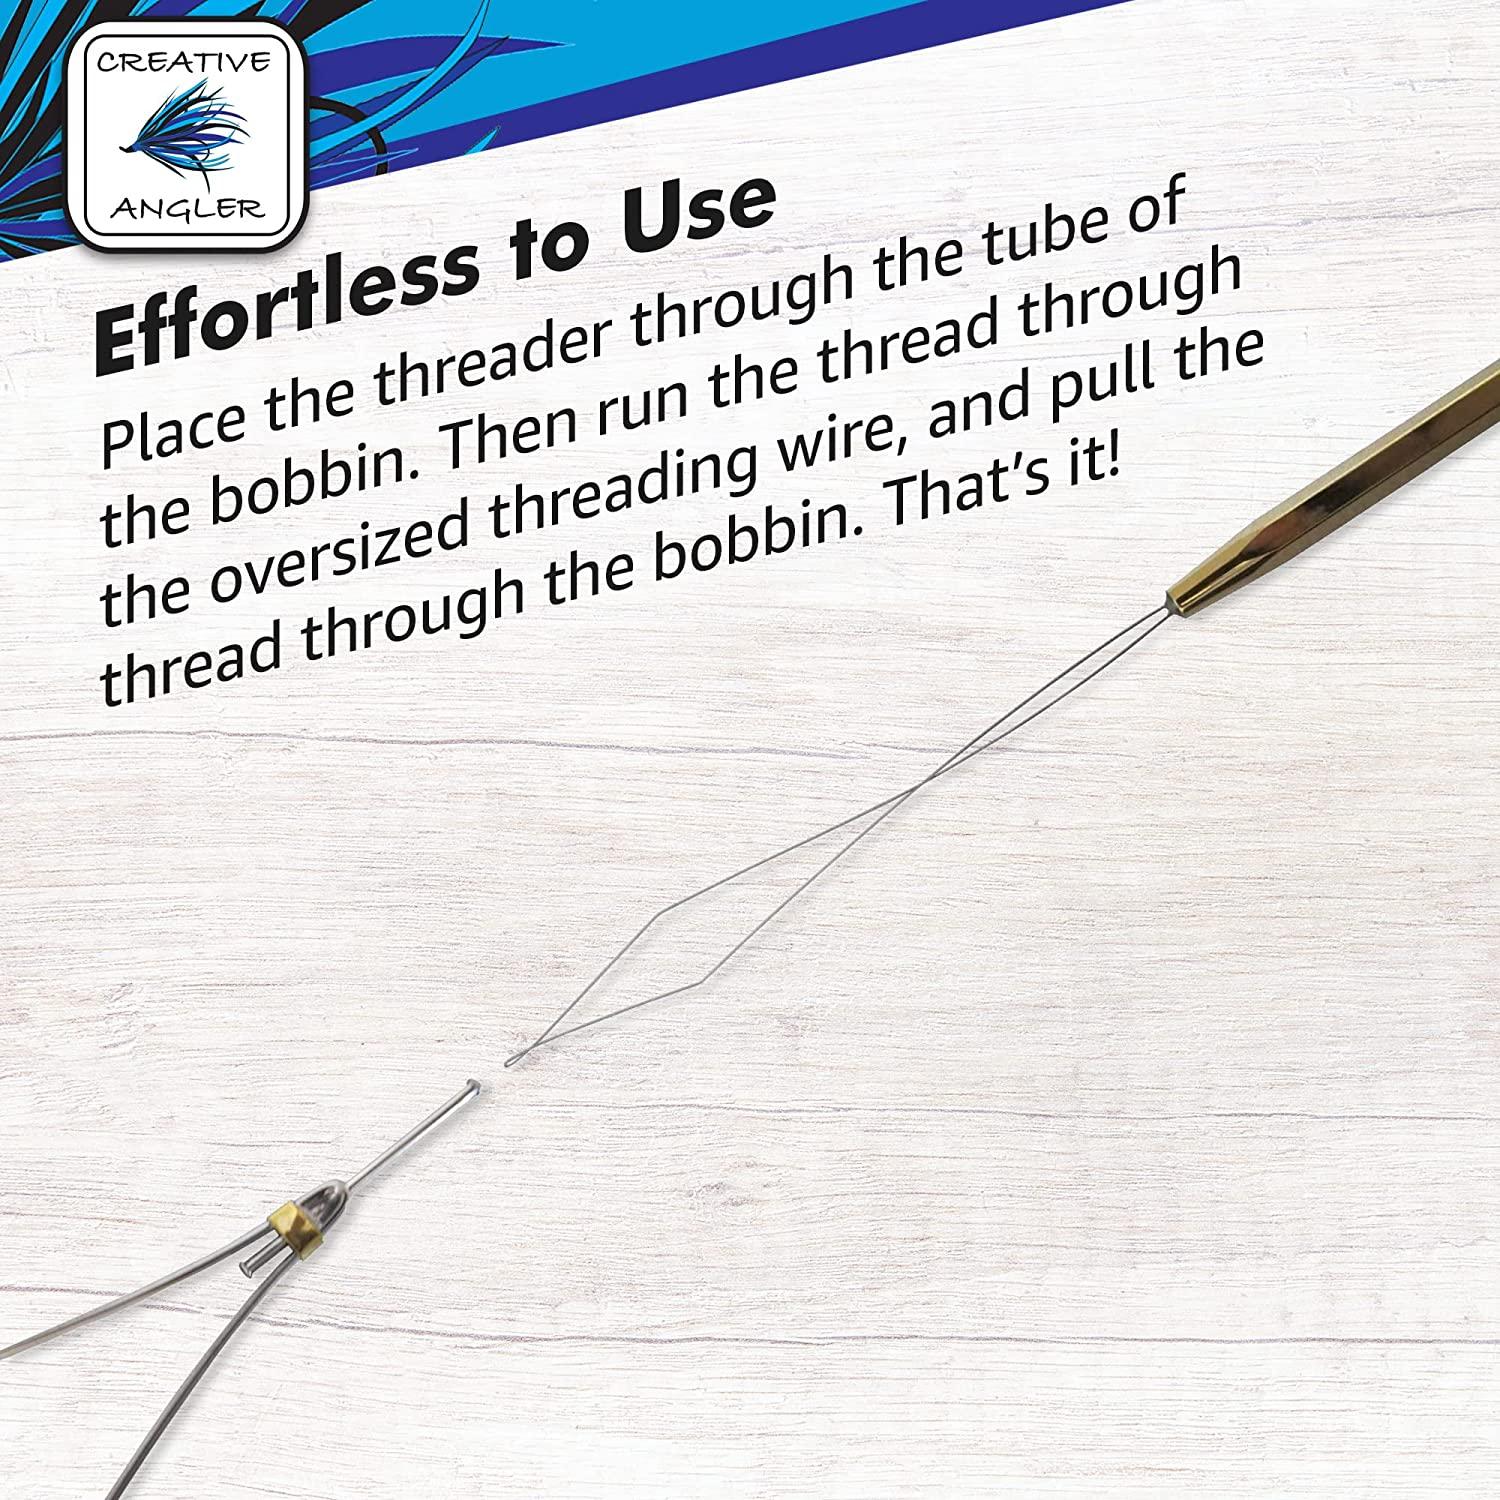 Creative Angler Bobbin Threader for Fly Tying, Fly Fishing Flie or